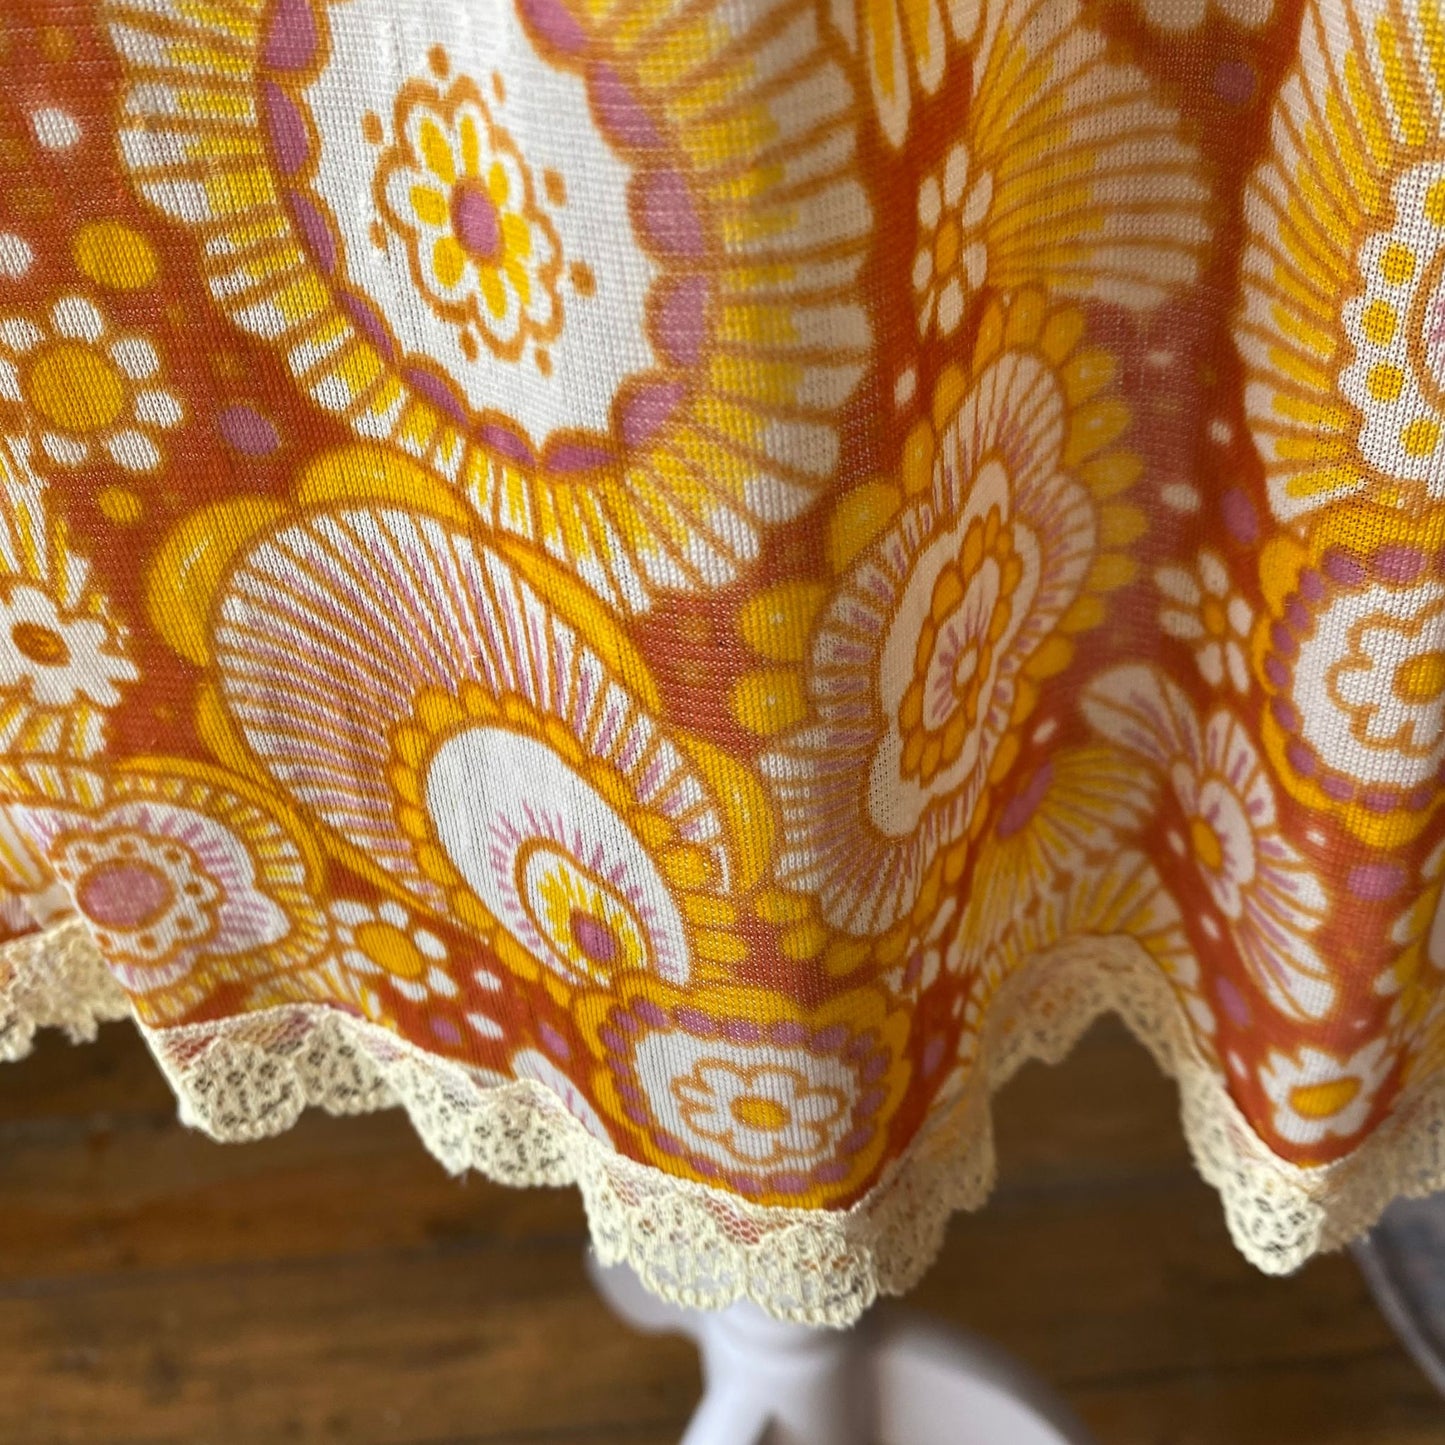 70s yellow and orange psychedelic print waist slip/ skirt. Approx U.K. size 14-20